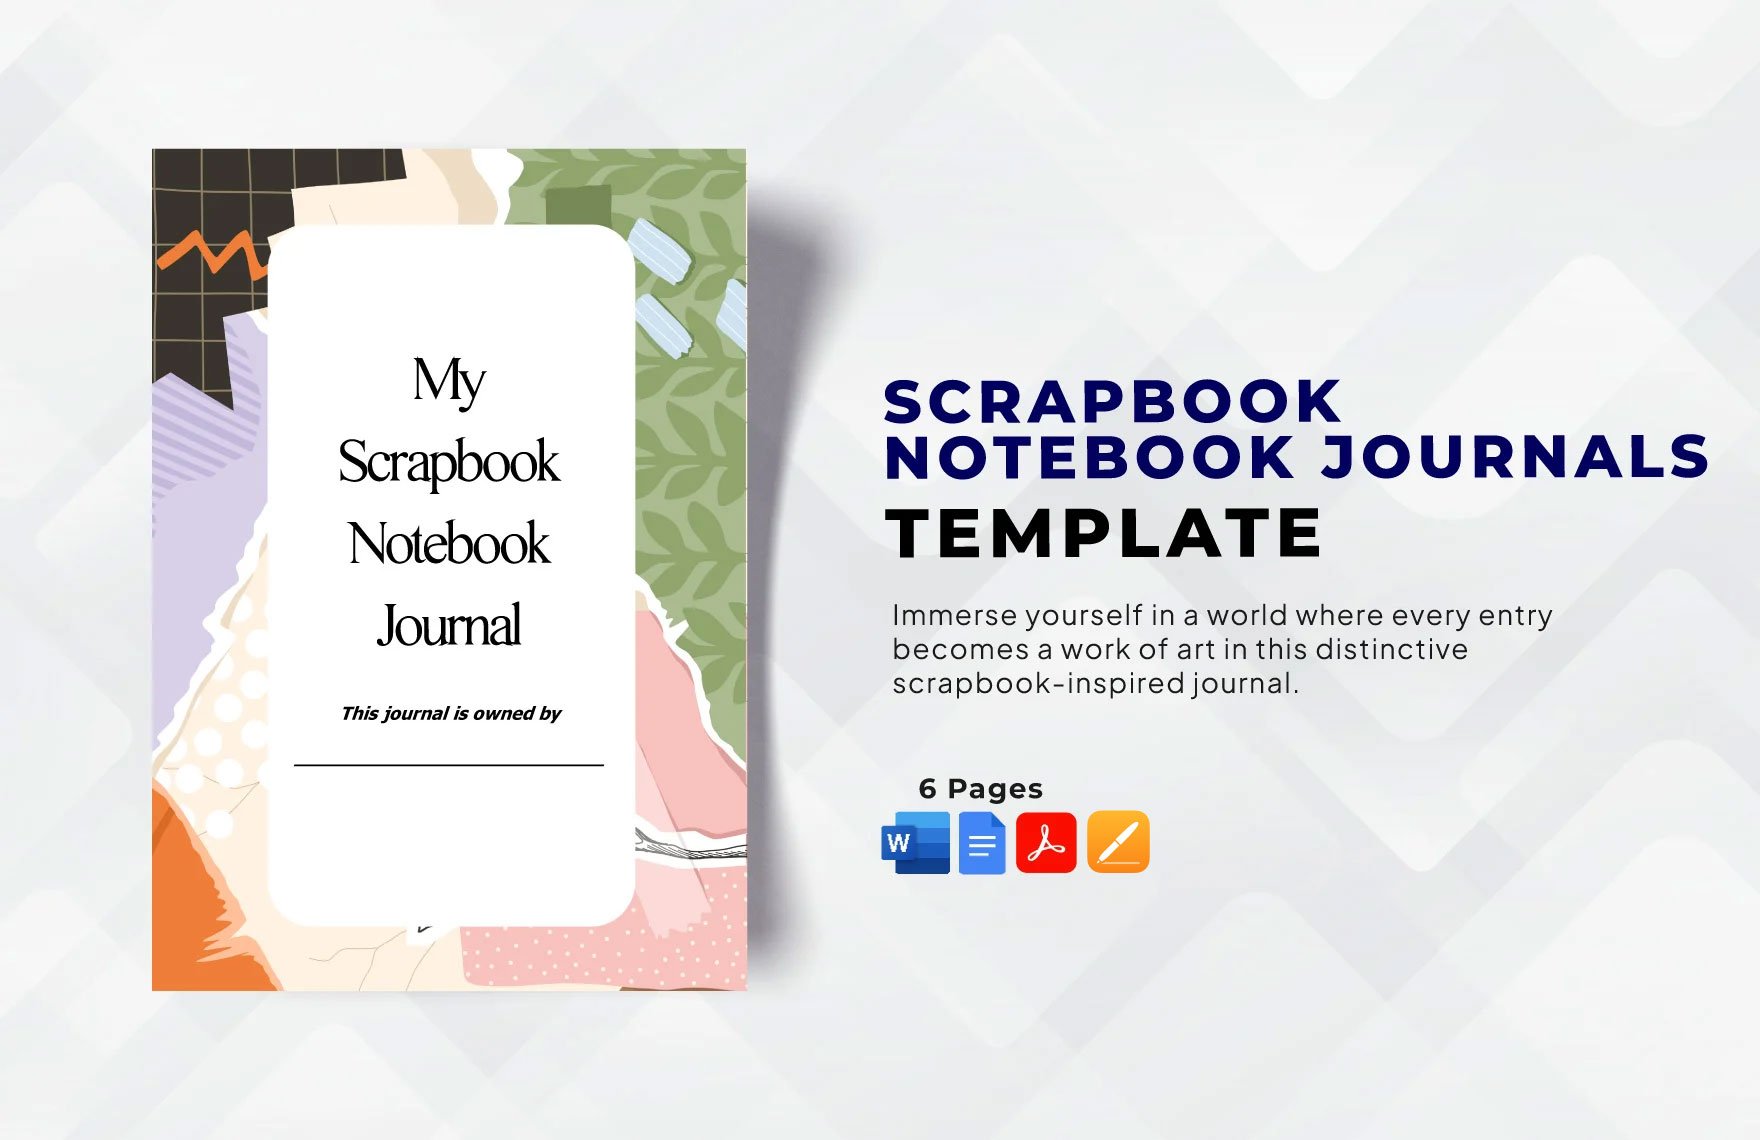 Scrapbook Notebook Journals Template